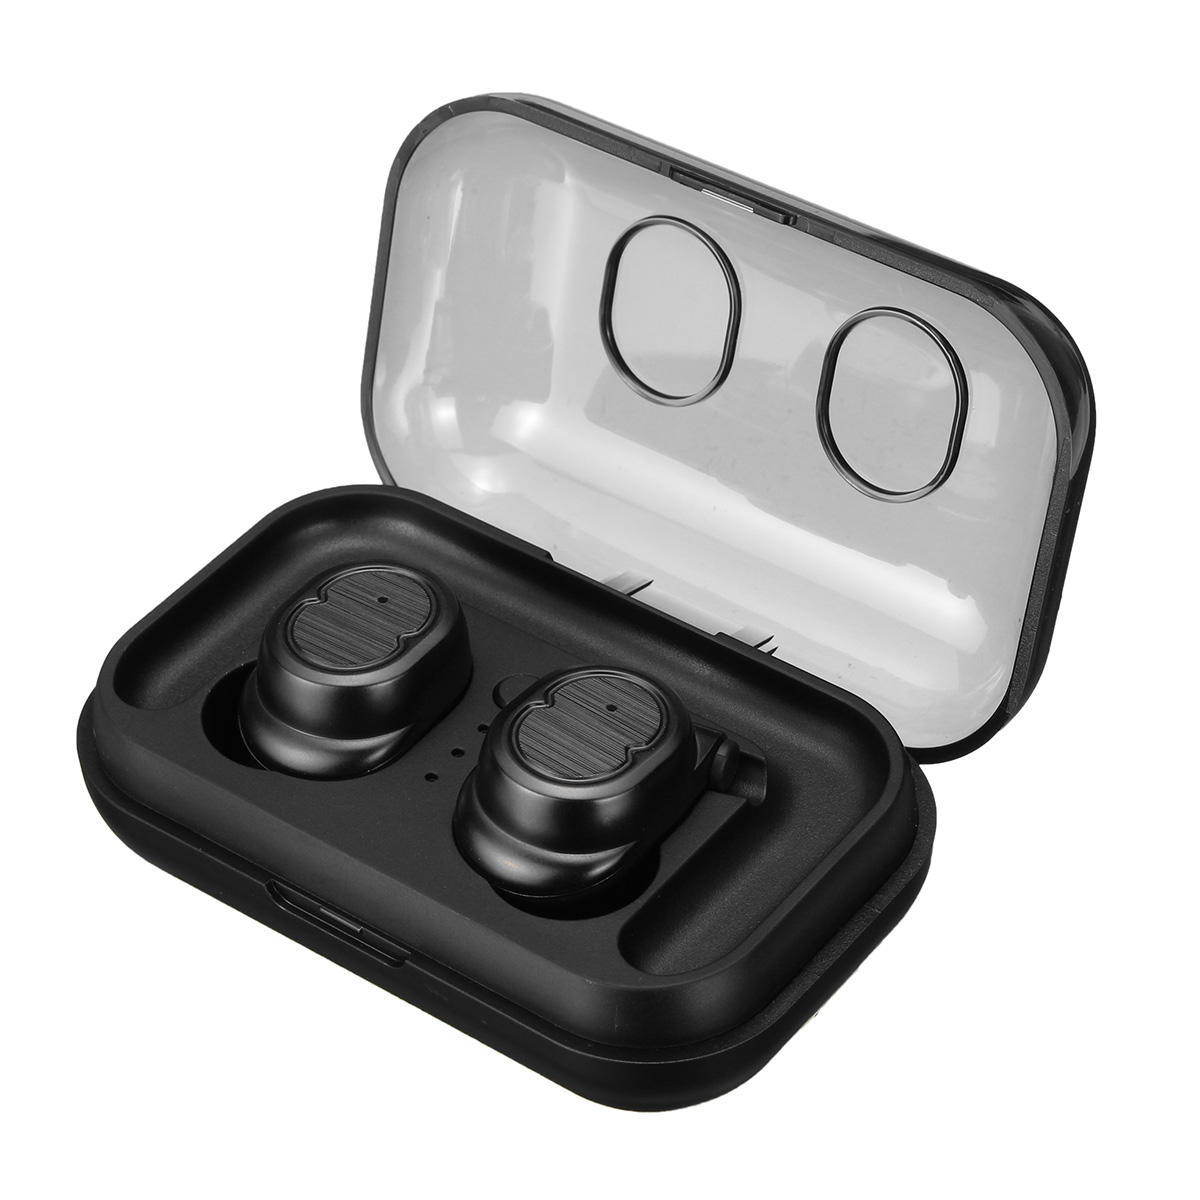 [Bluetooth 5.0] Wahre drahtlose Sport-Ohrhörer HiFi-Stereokopfhörer Touch Control Auto Pairing-Kopfhörer mit Mikrofon